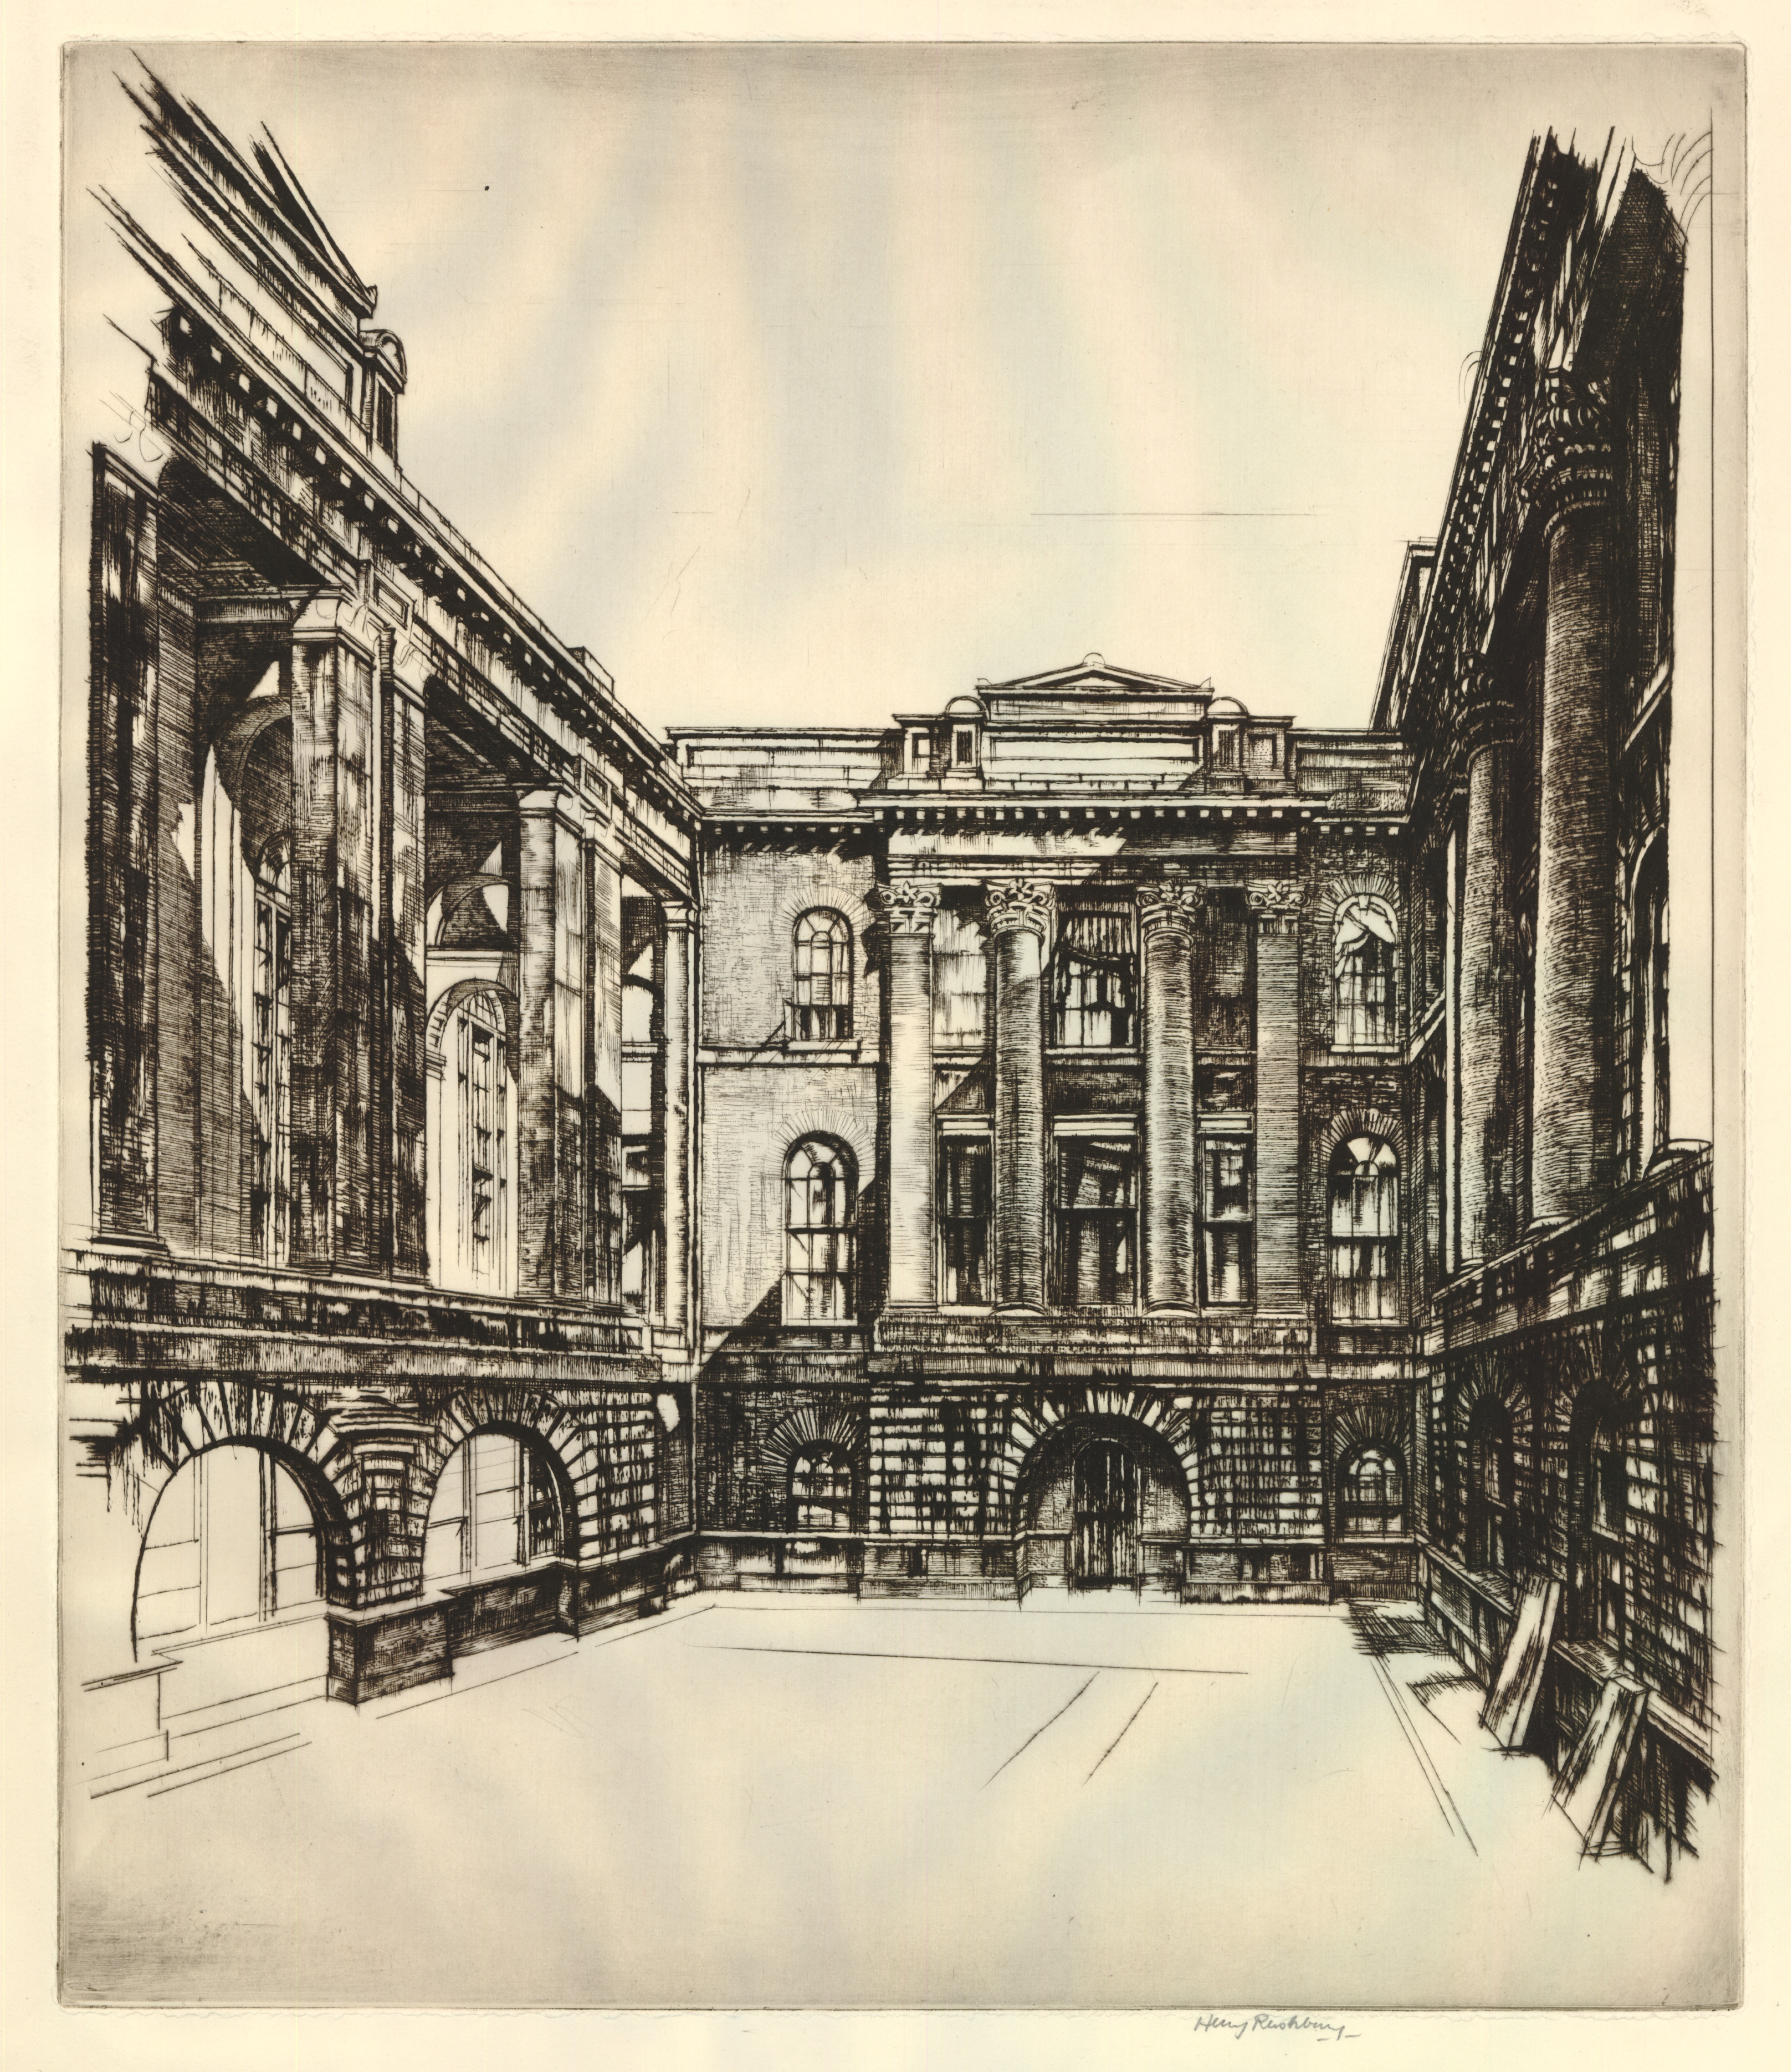 Governor's Court, Bank of England (1925-29)